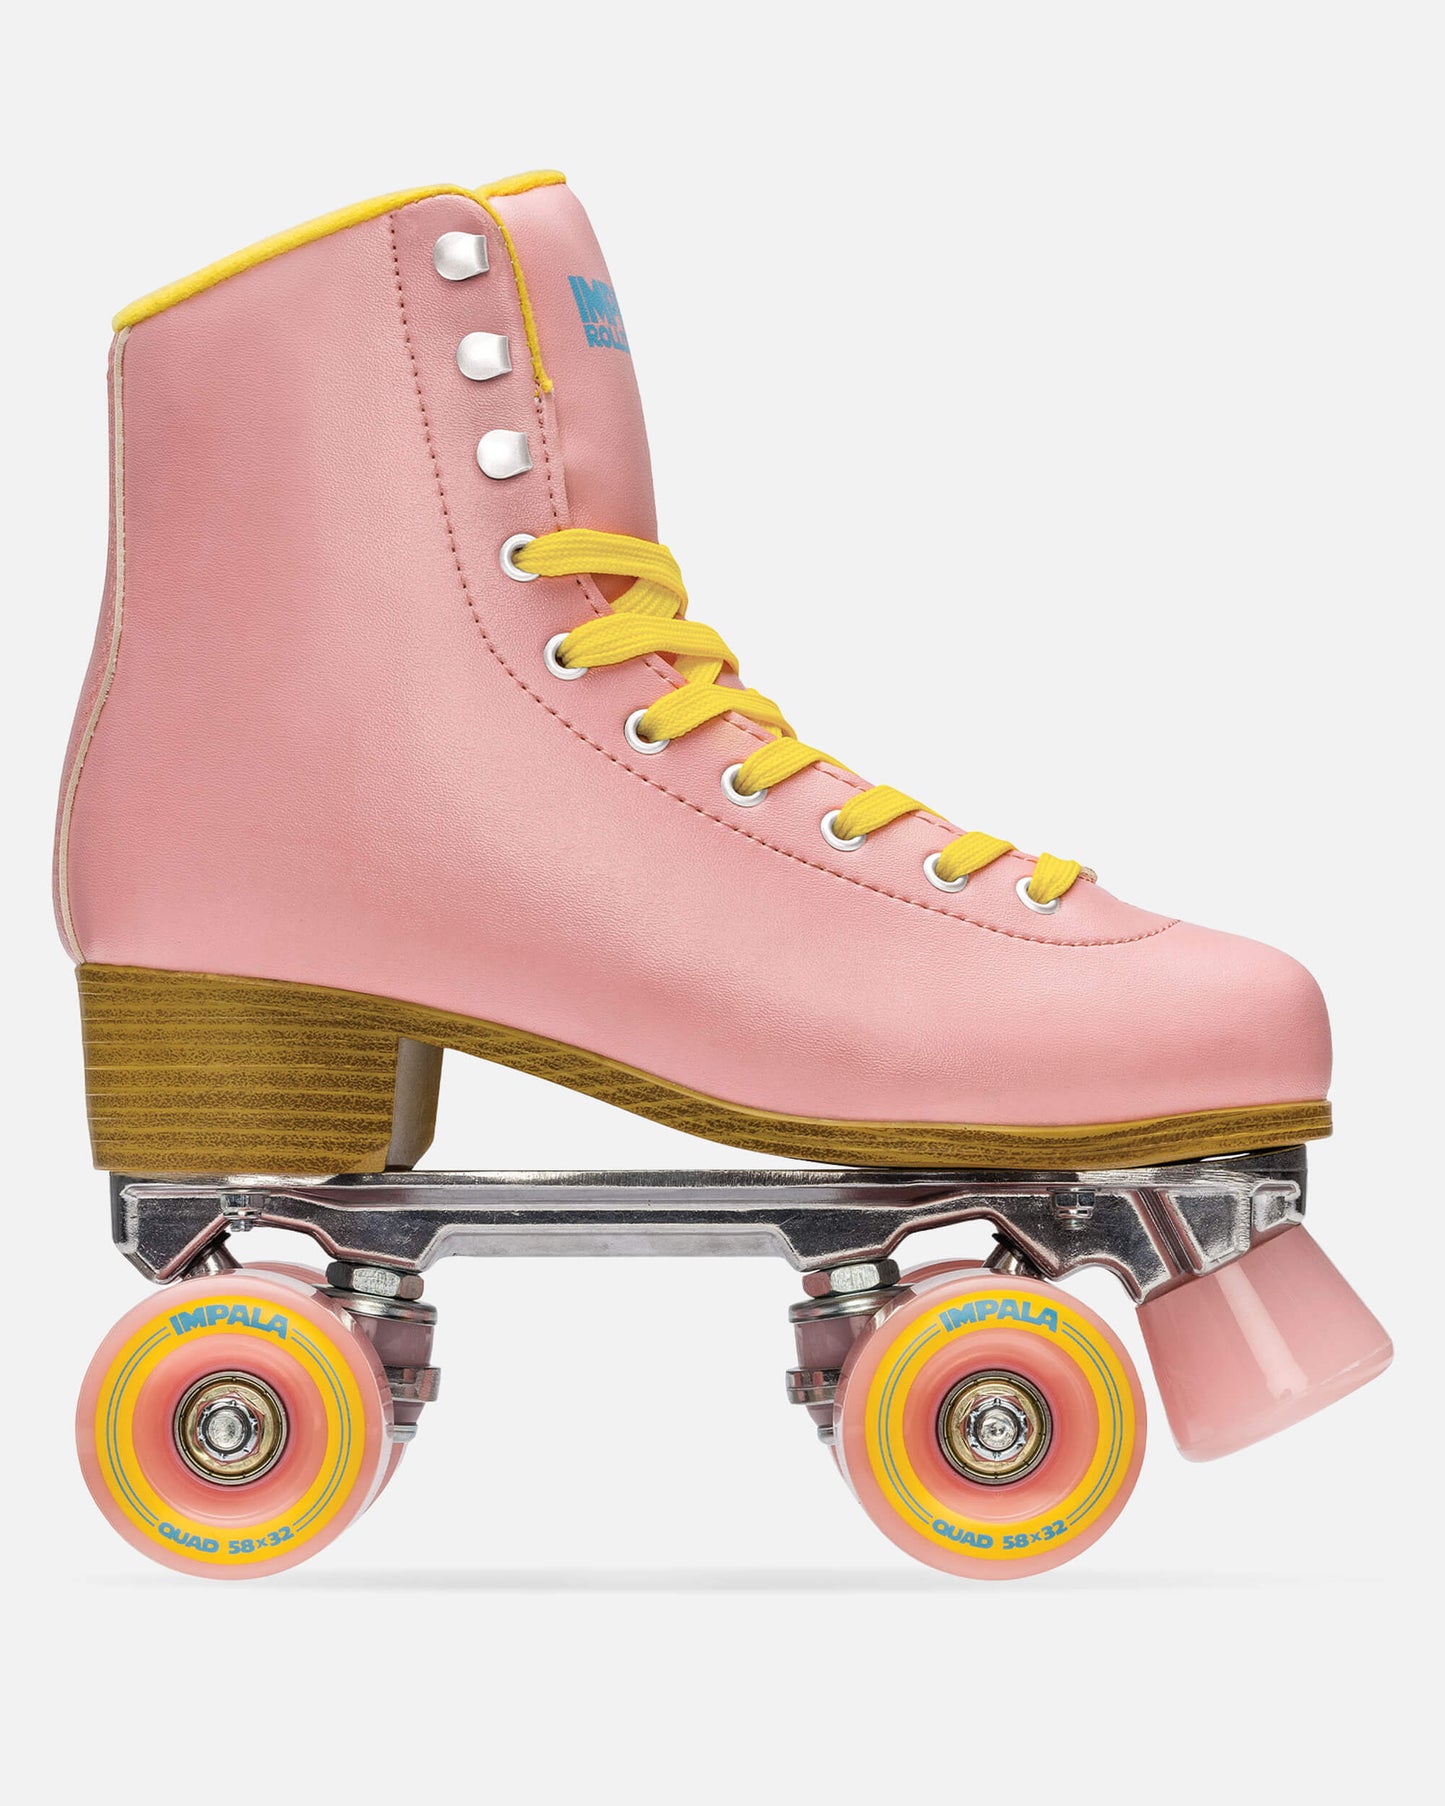 Patins Impala Roller Skates - Pink